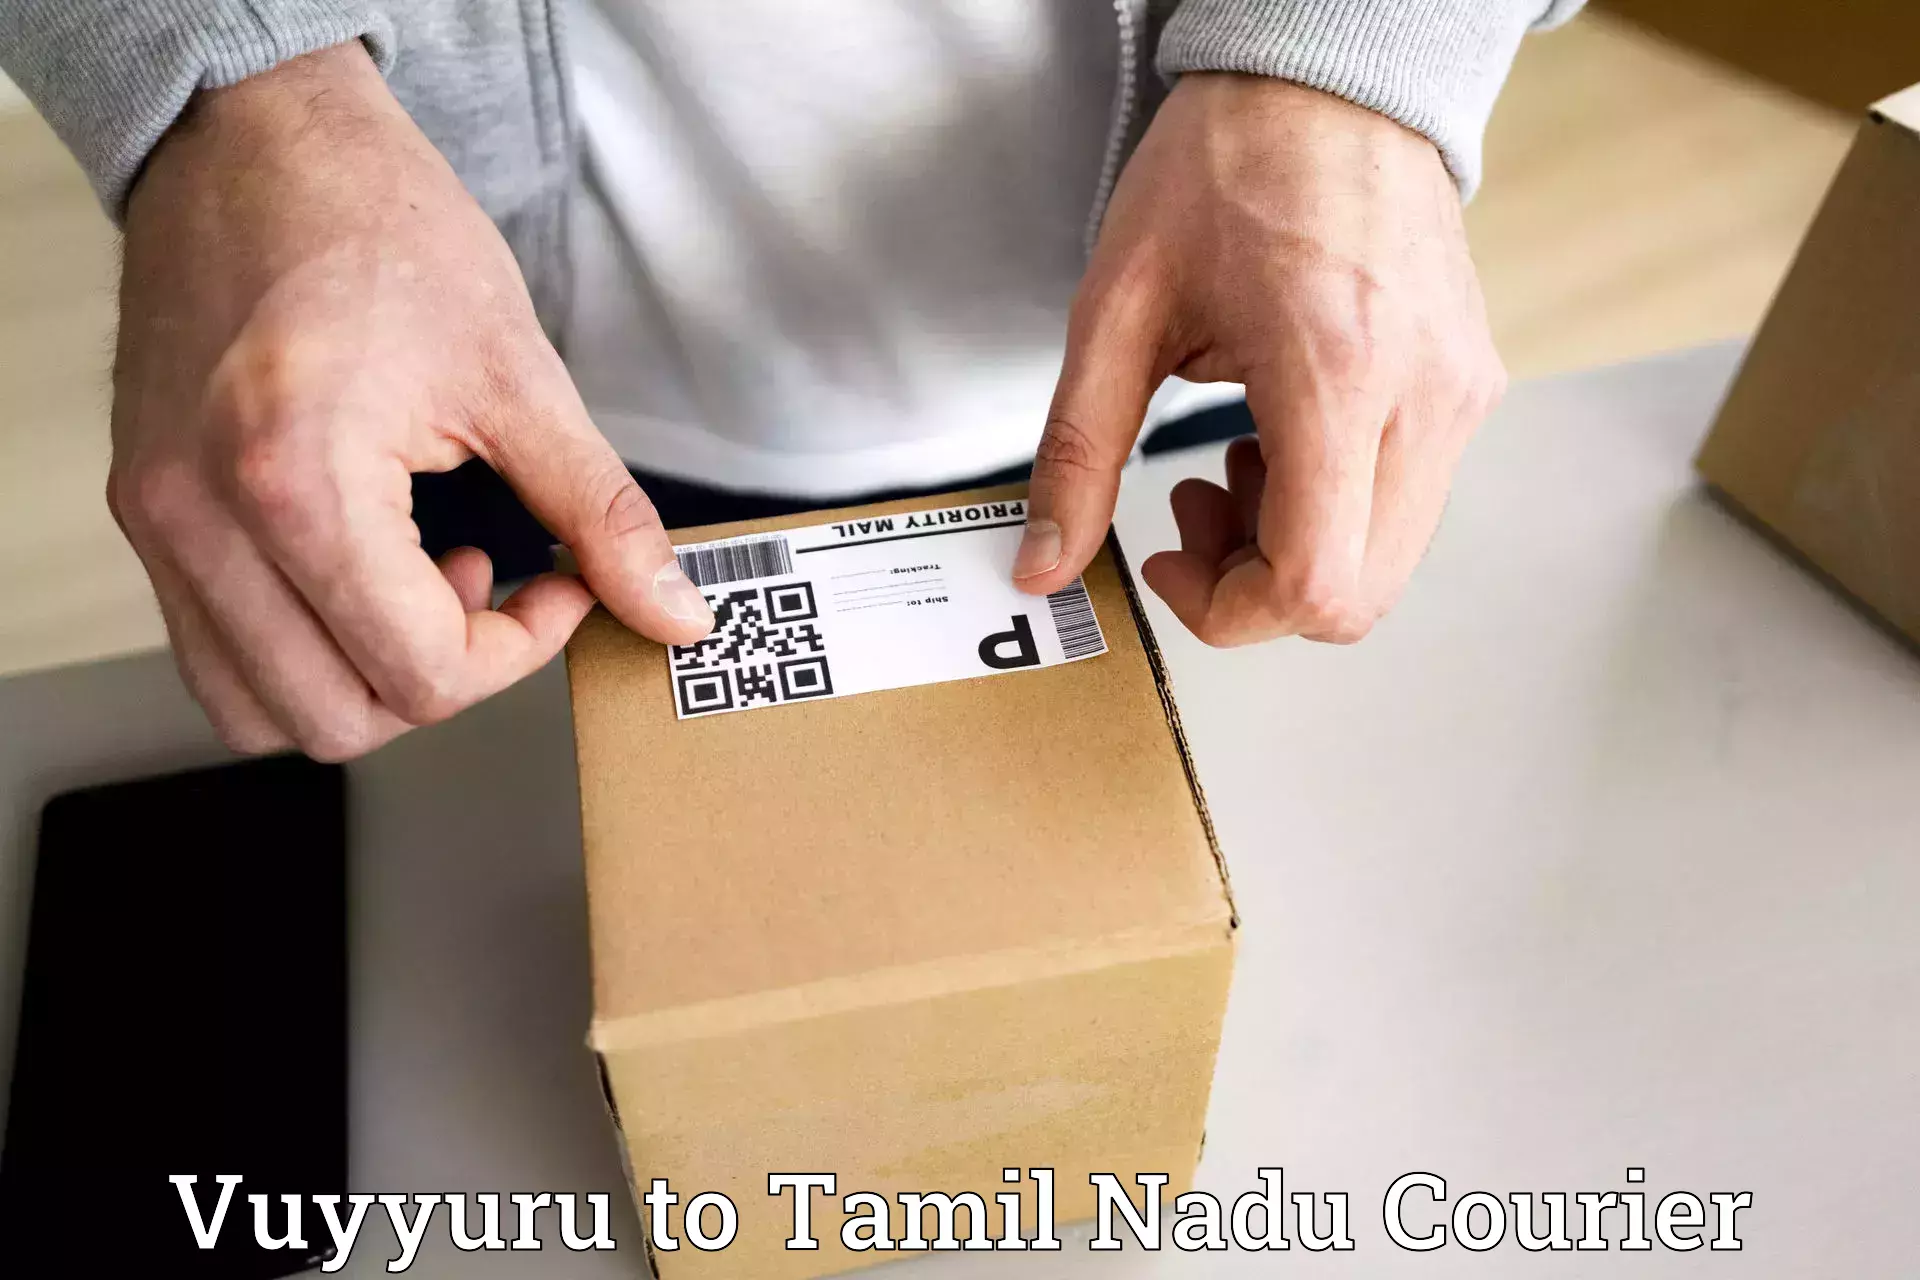 Budget-friendly shipping Vuyyuru to Tamil Nadu